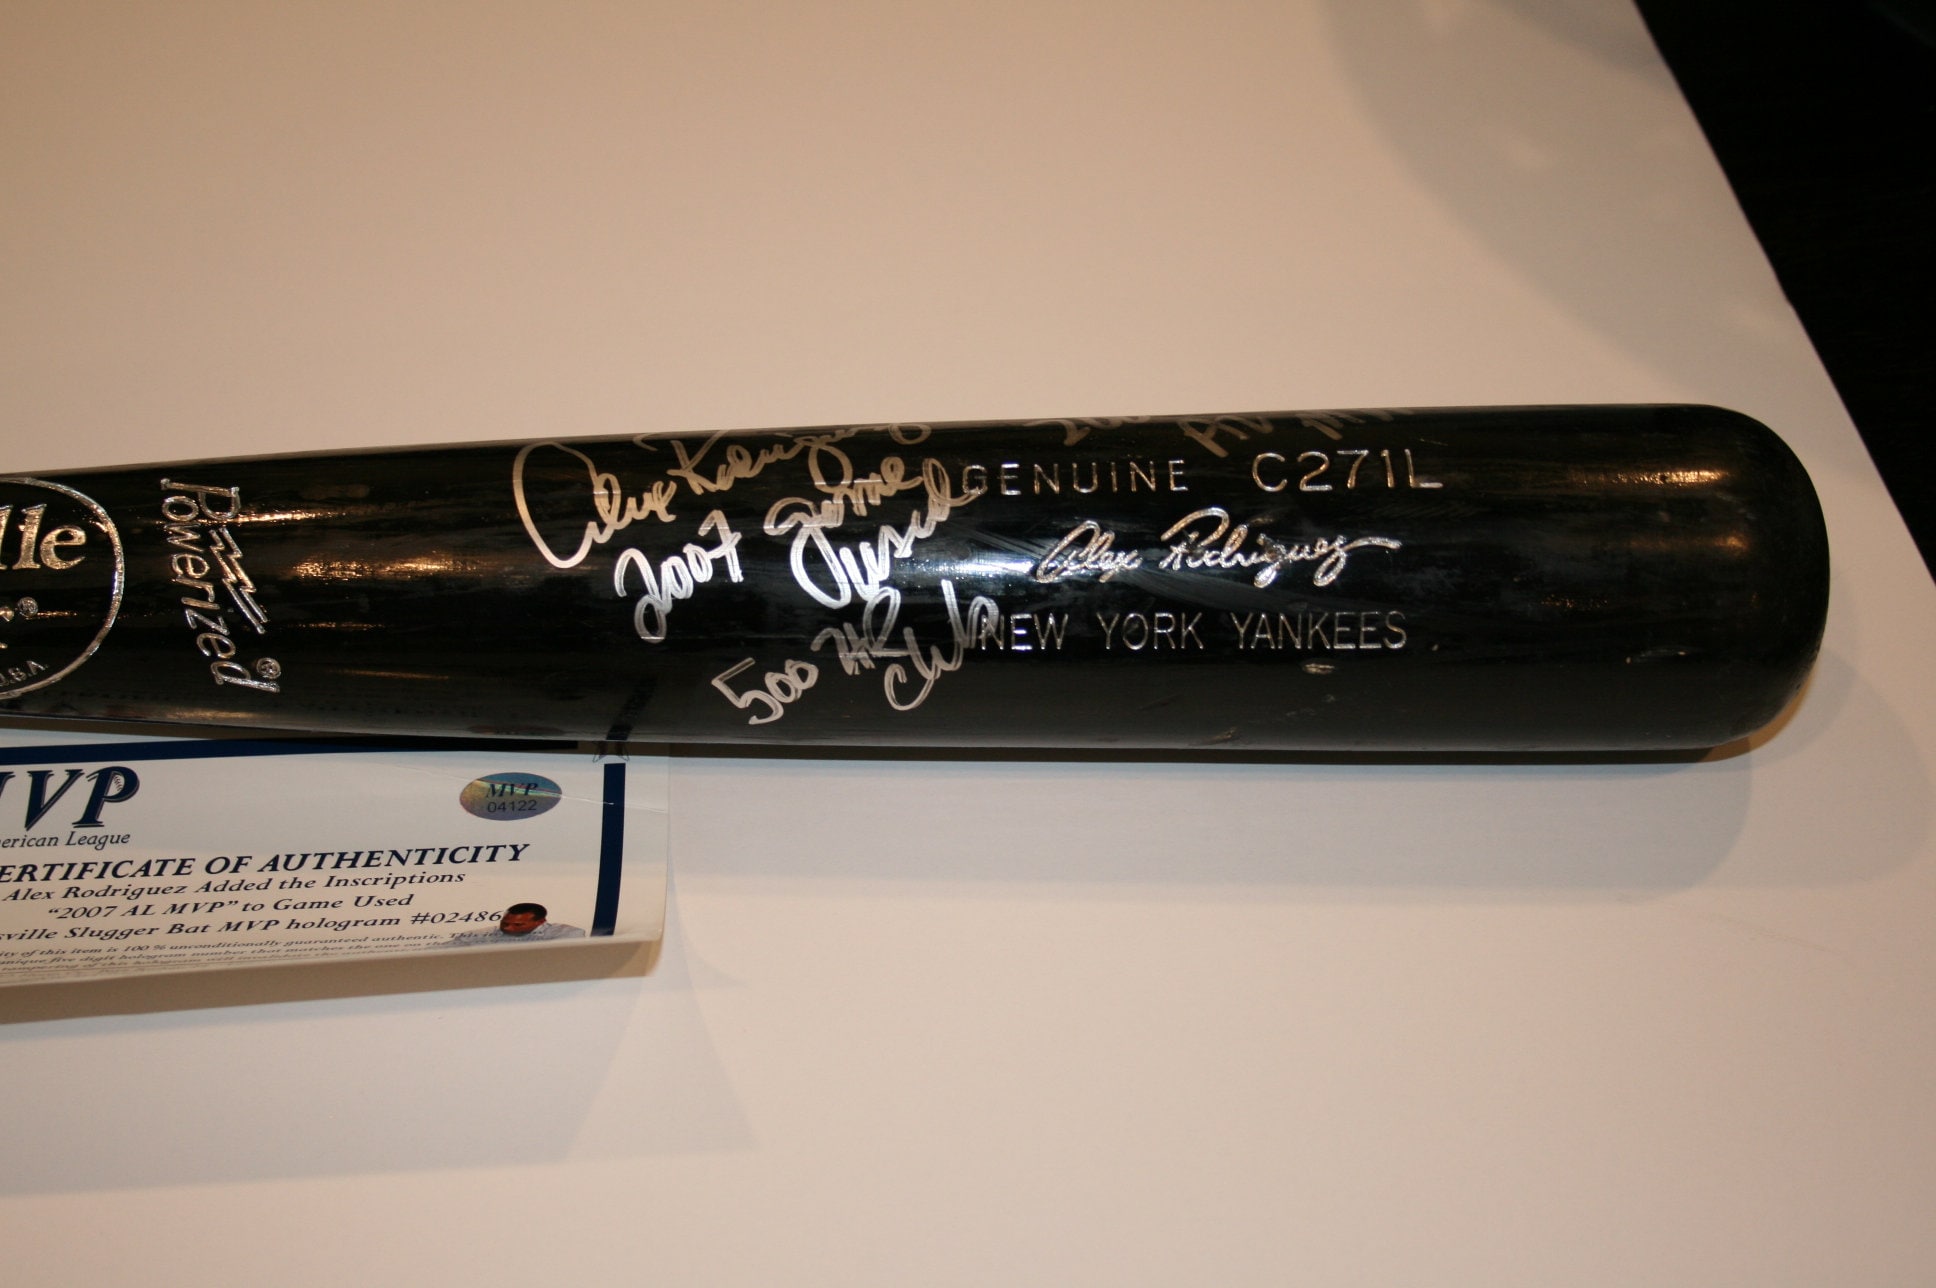 Alex Rodriguez Autographed Game Used Baseball Bat with (3) Inscriptions!  COA!